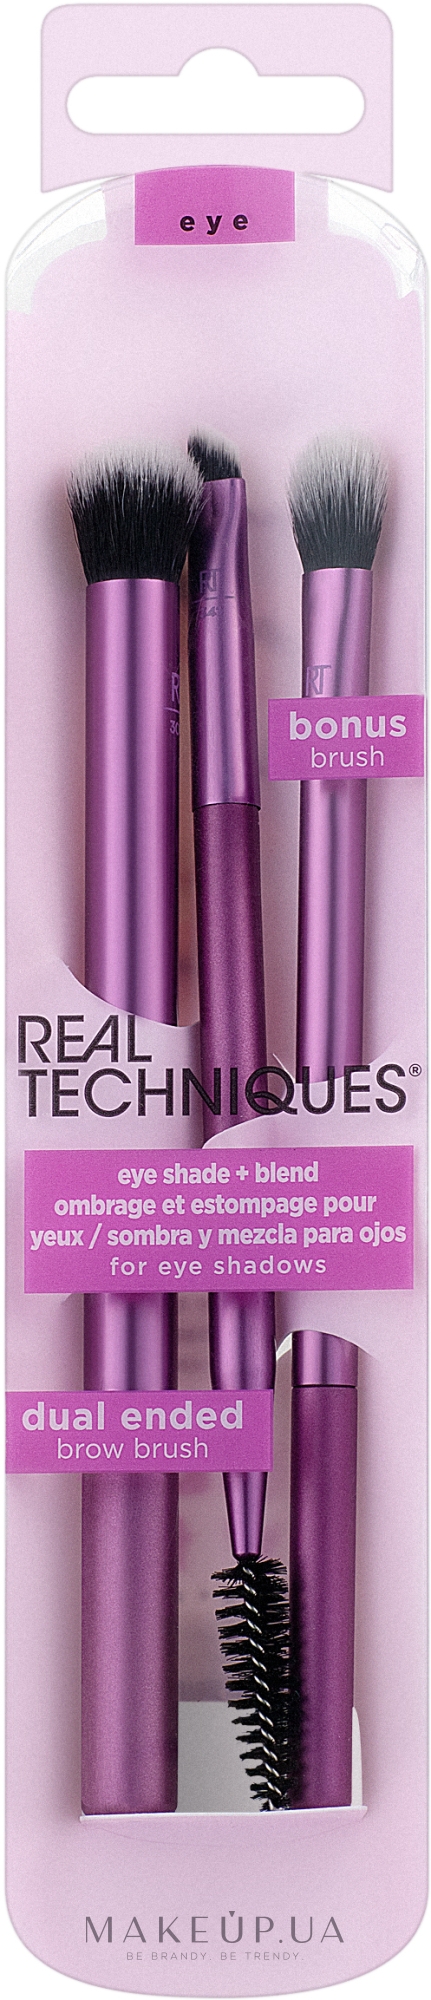 Набор кистей для макияжа, фиолетовый - Real Techniques Eye Shade + Blend + Dual Ended Brow — фото 3шт